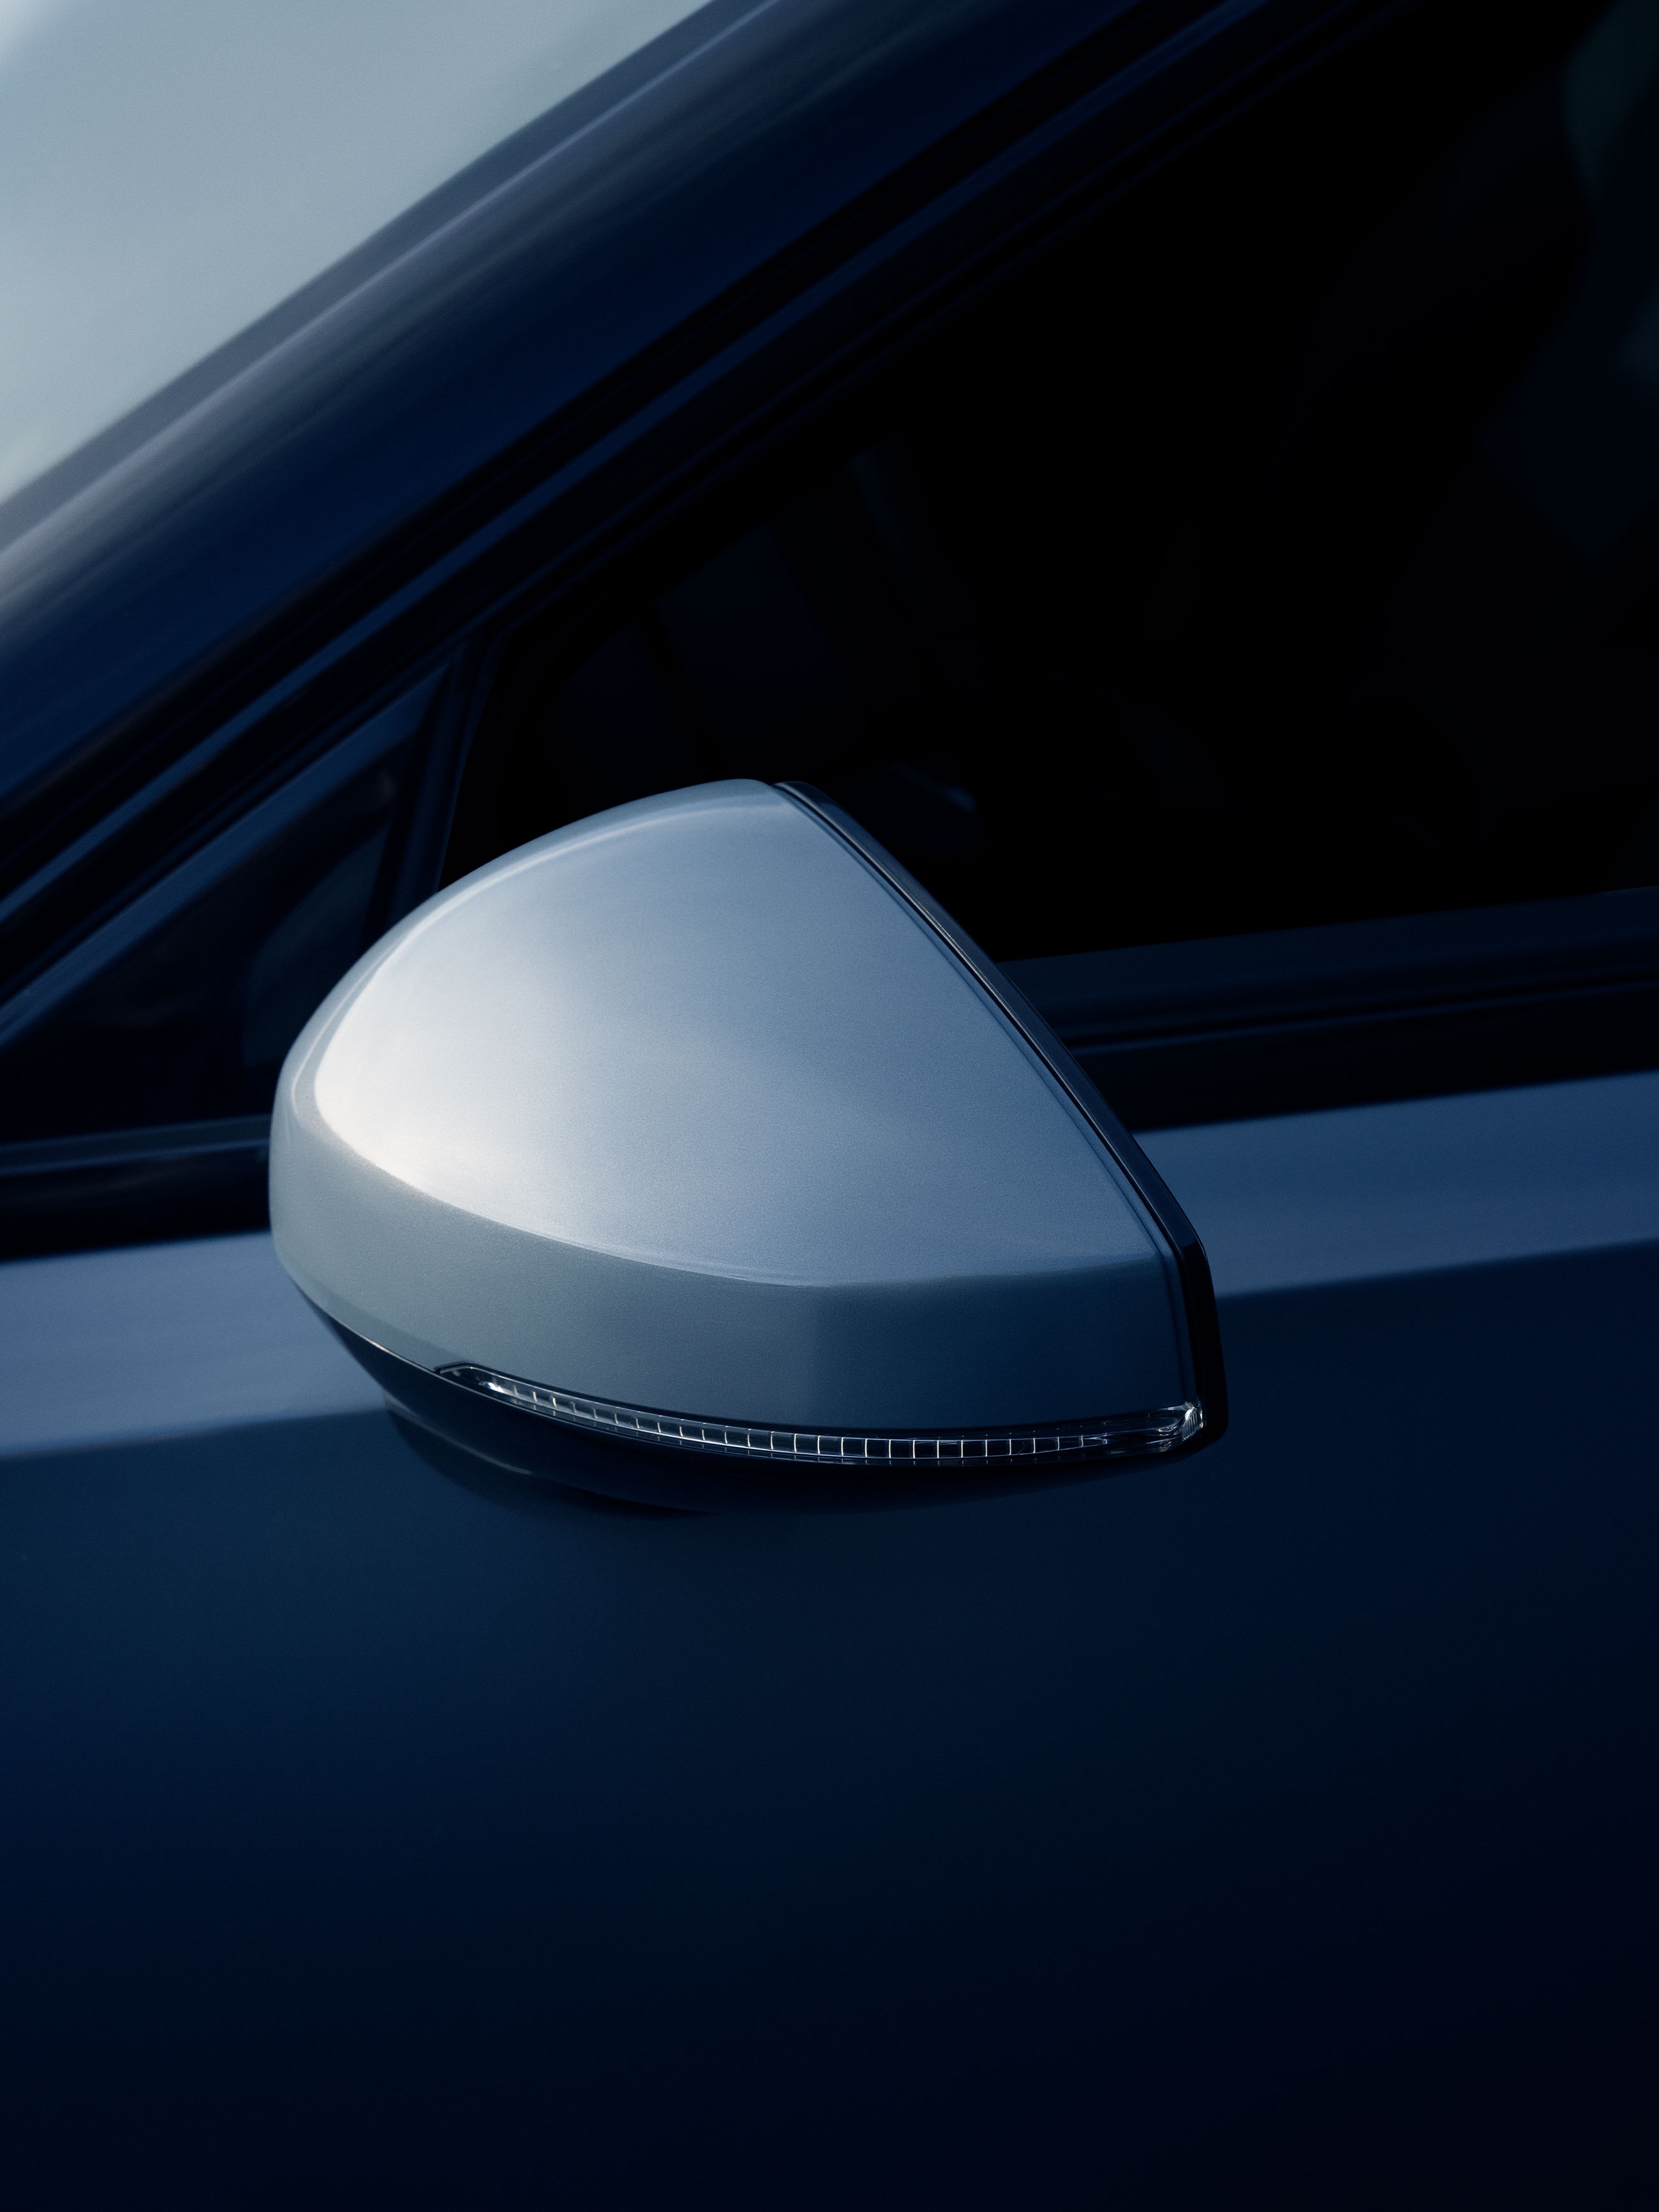 A side-view mirror on a futuristic car